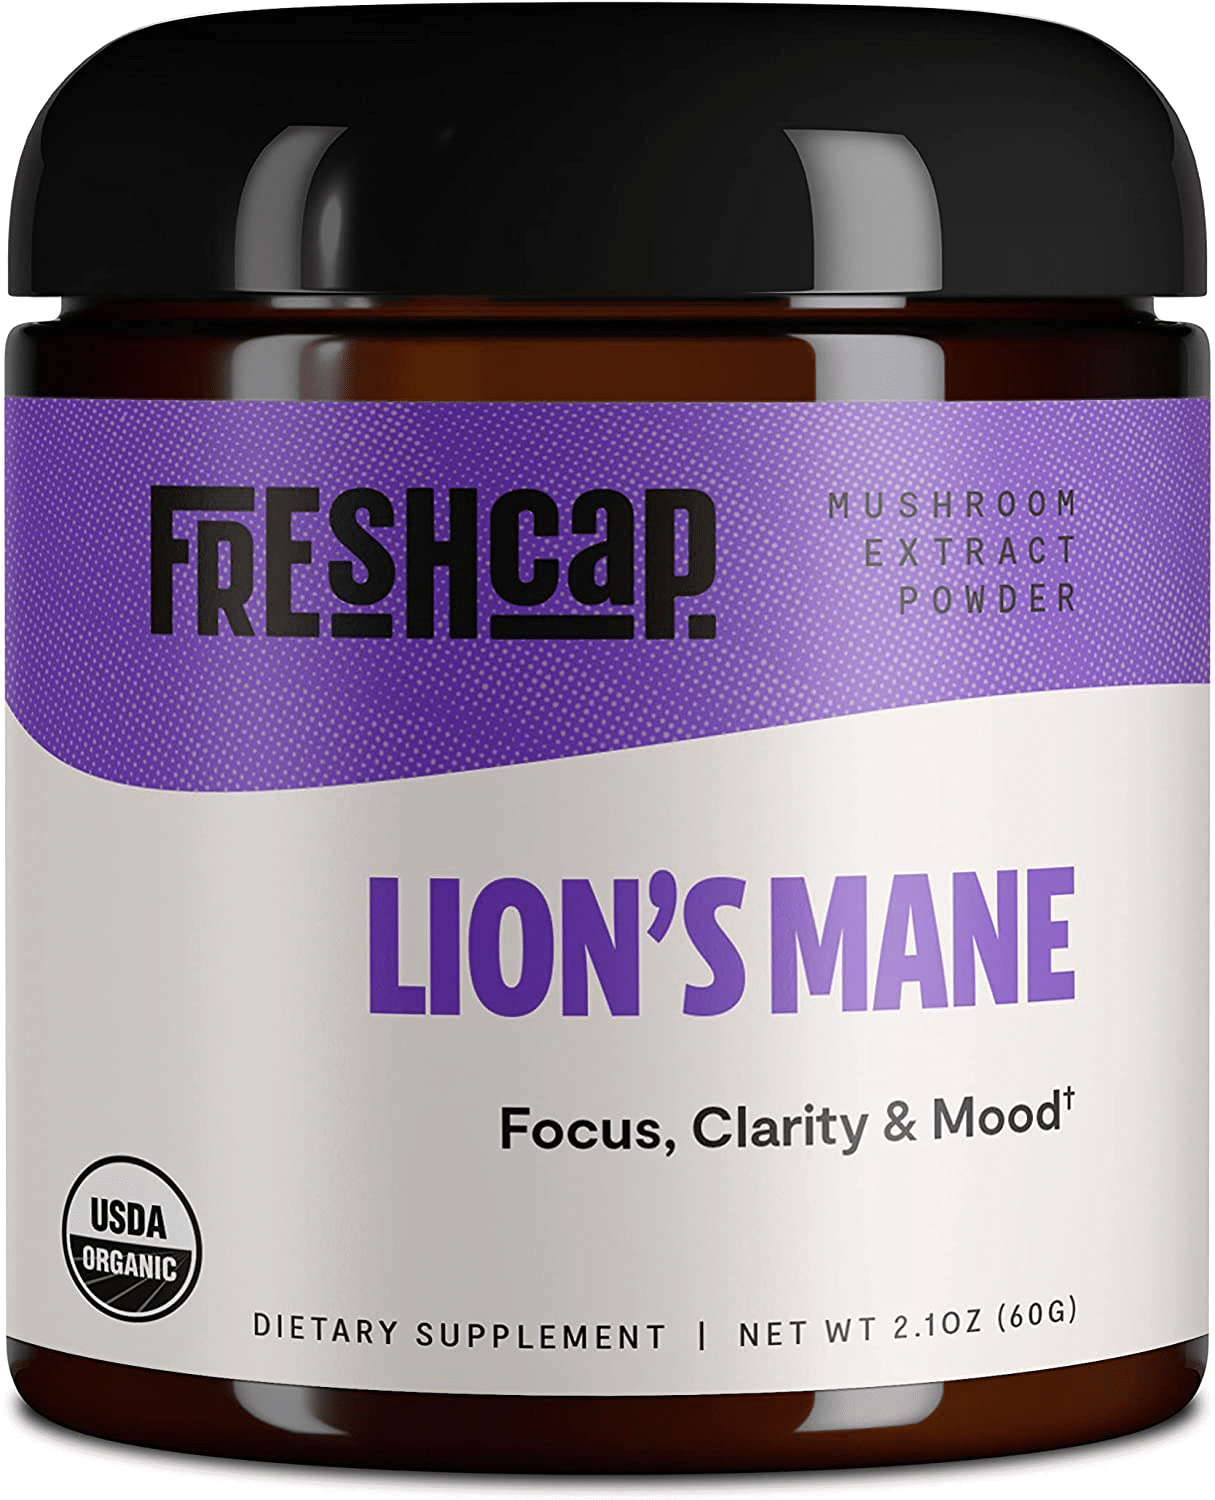 Picture of FreshCap lions mane powder